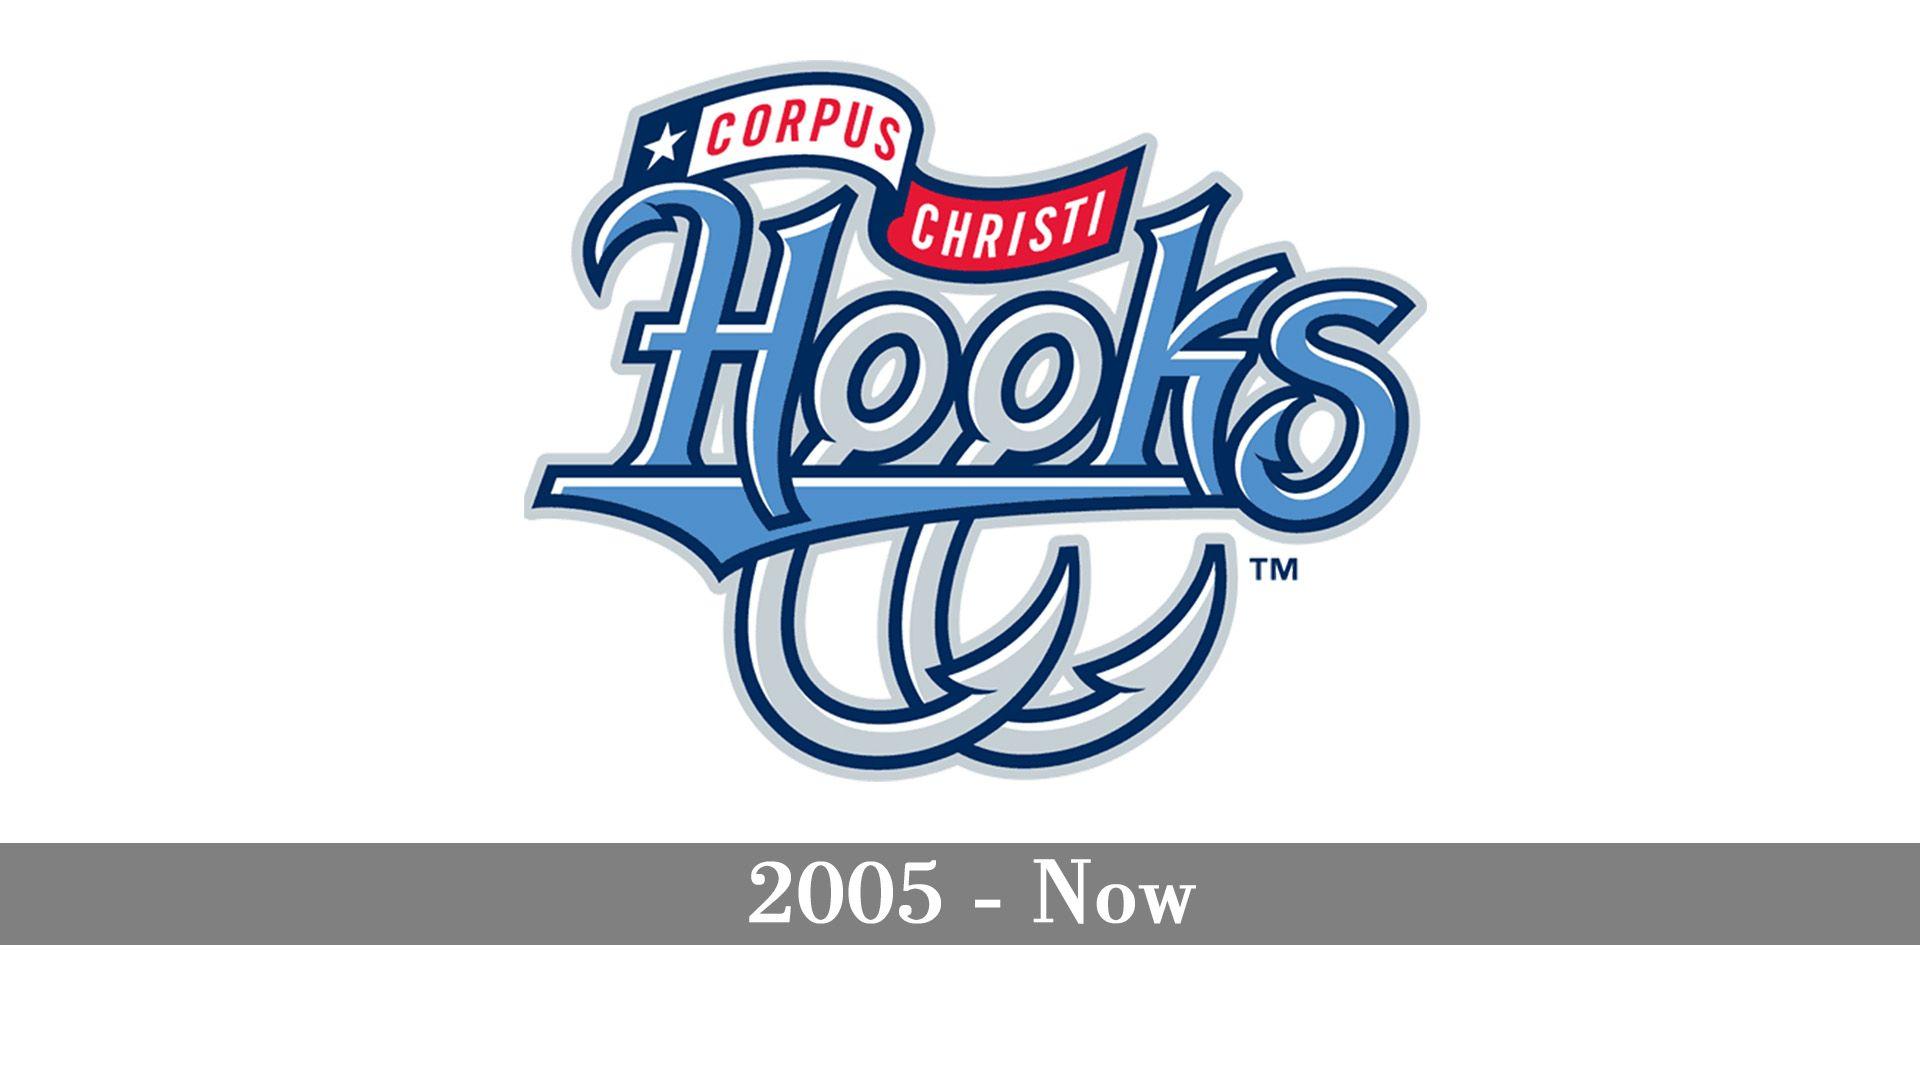 Hooks Logo - Meaning Corpus Christi Hooks logo and symbol | history and evolution